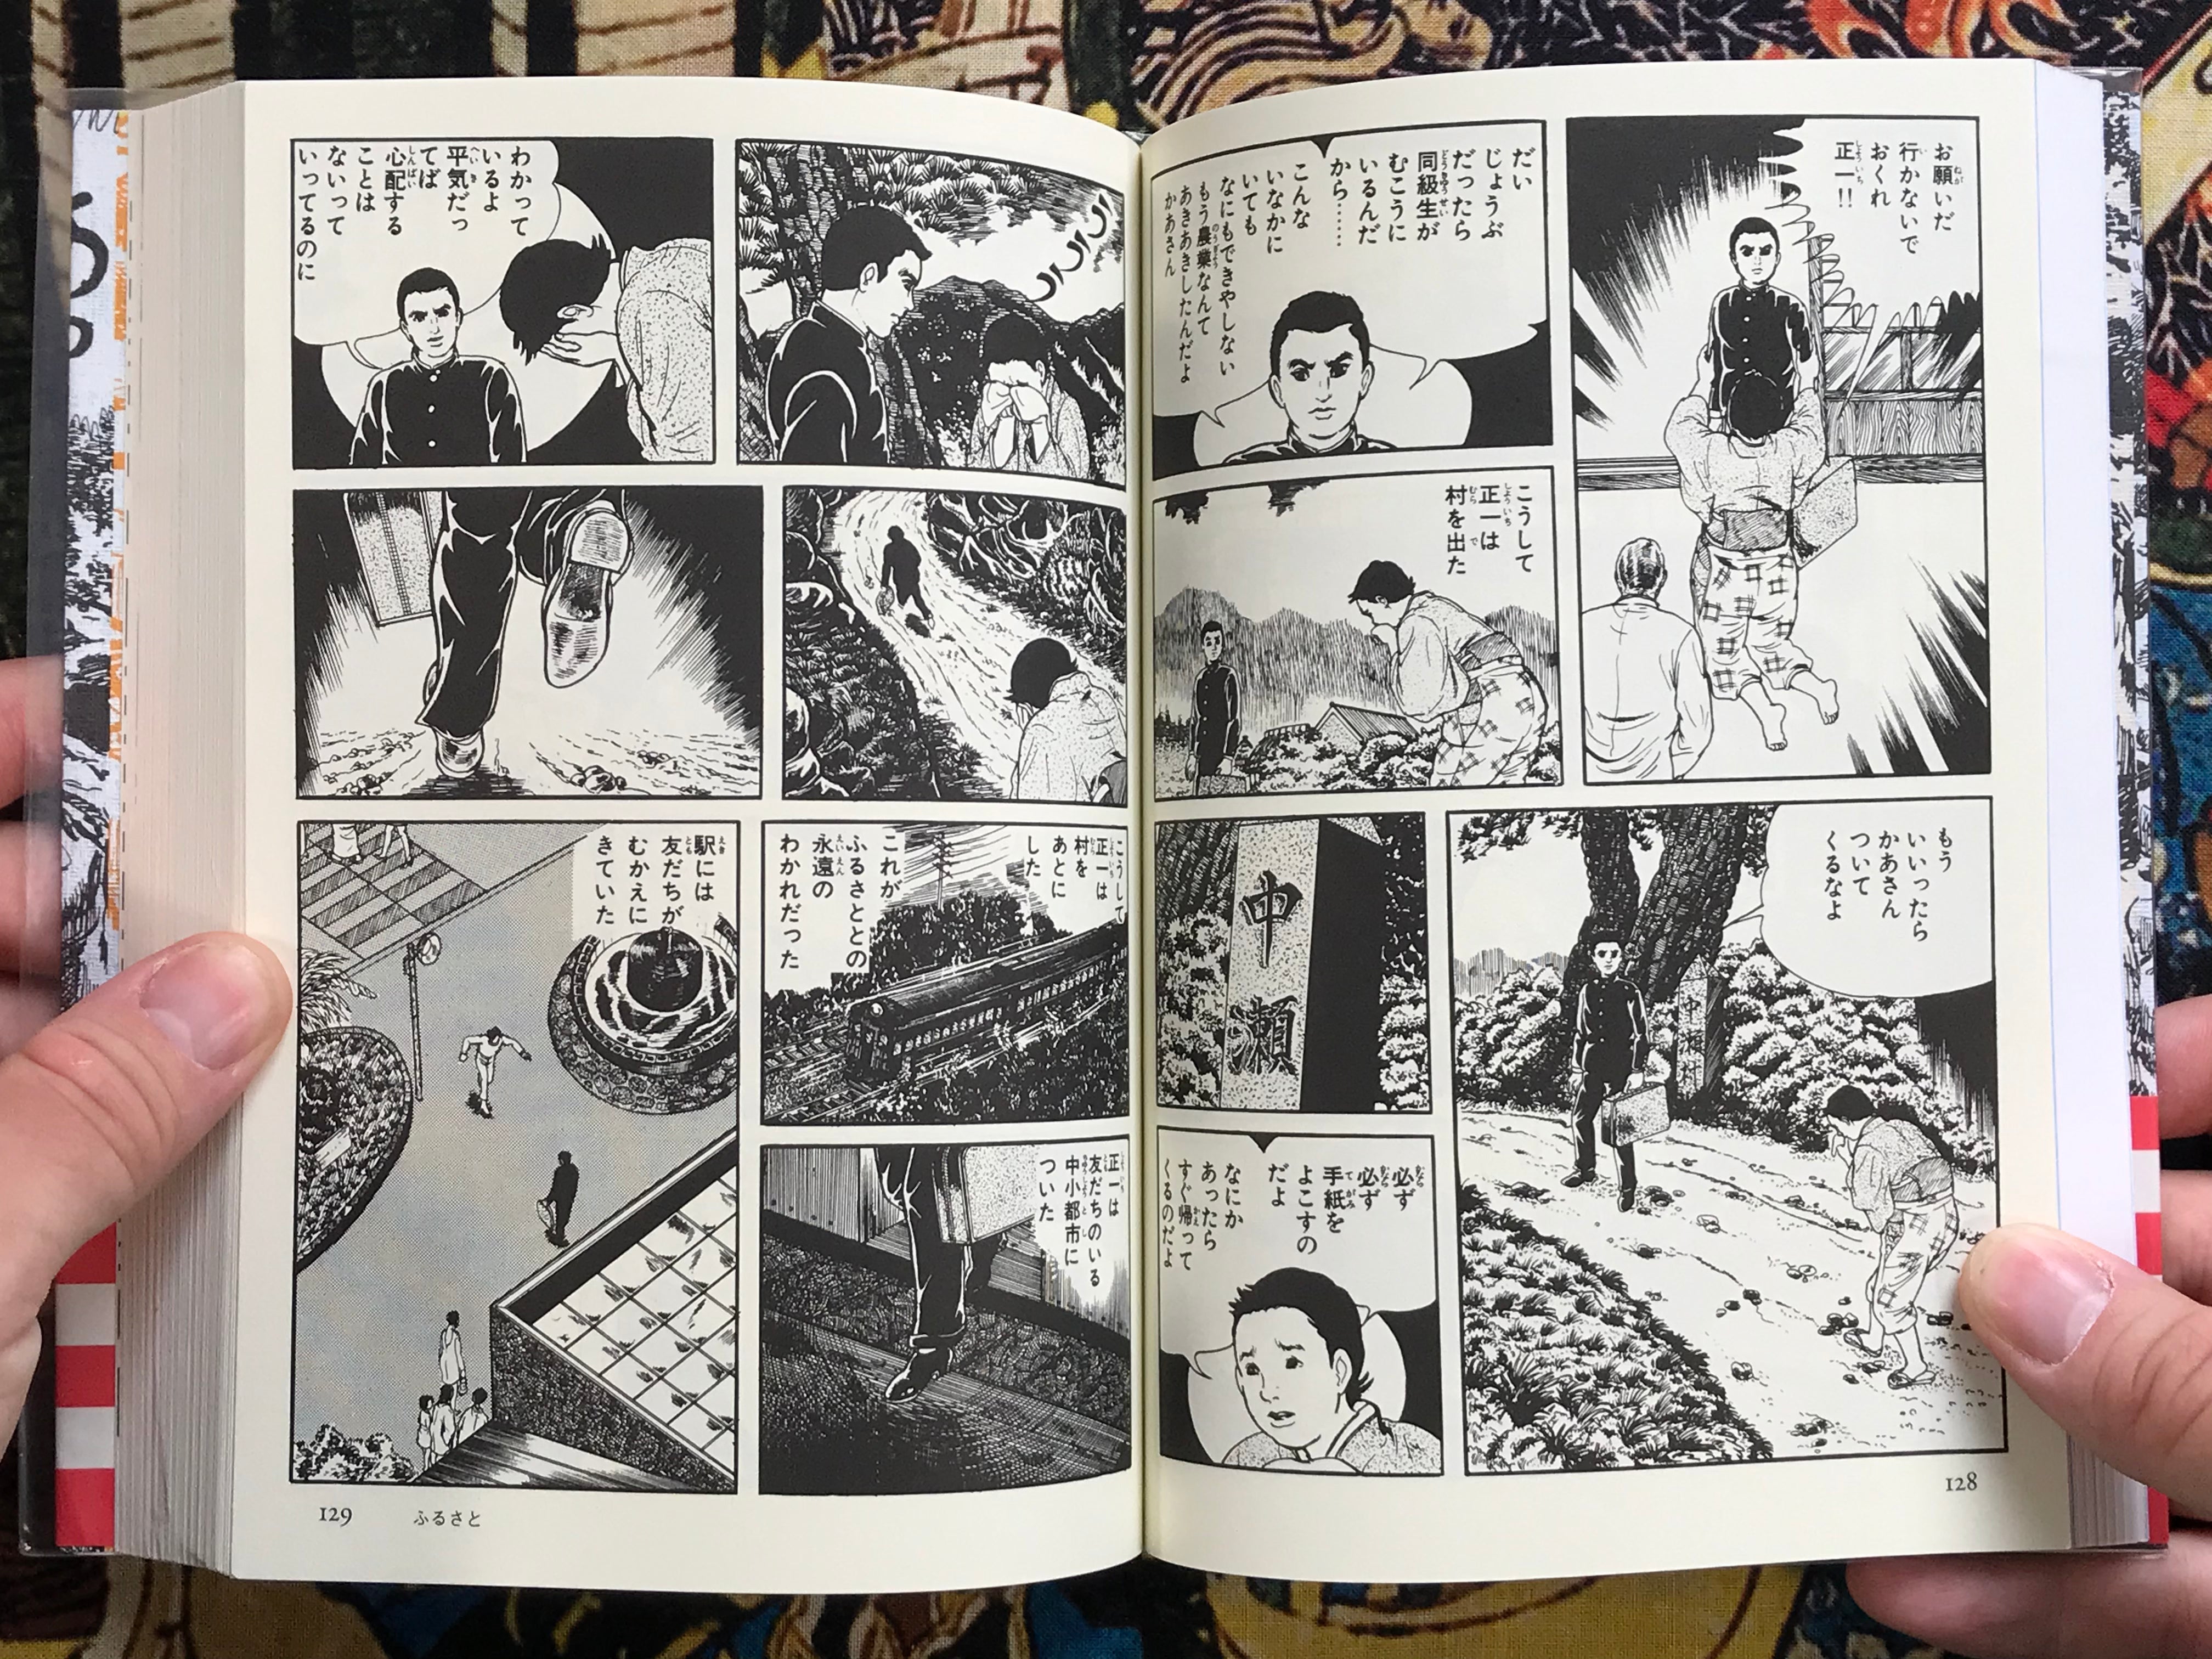 Orochi Perfection Edition 4 Volume Set by Umezz / Kazuo Umezu (2006)